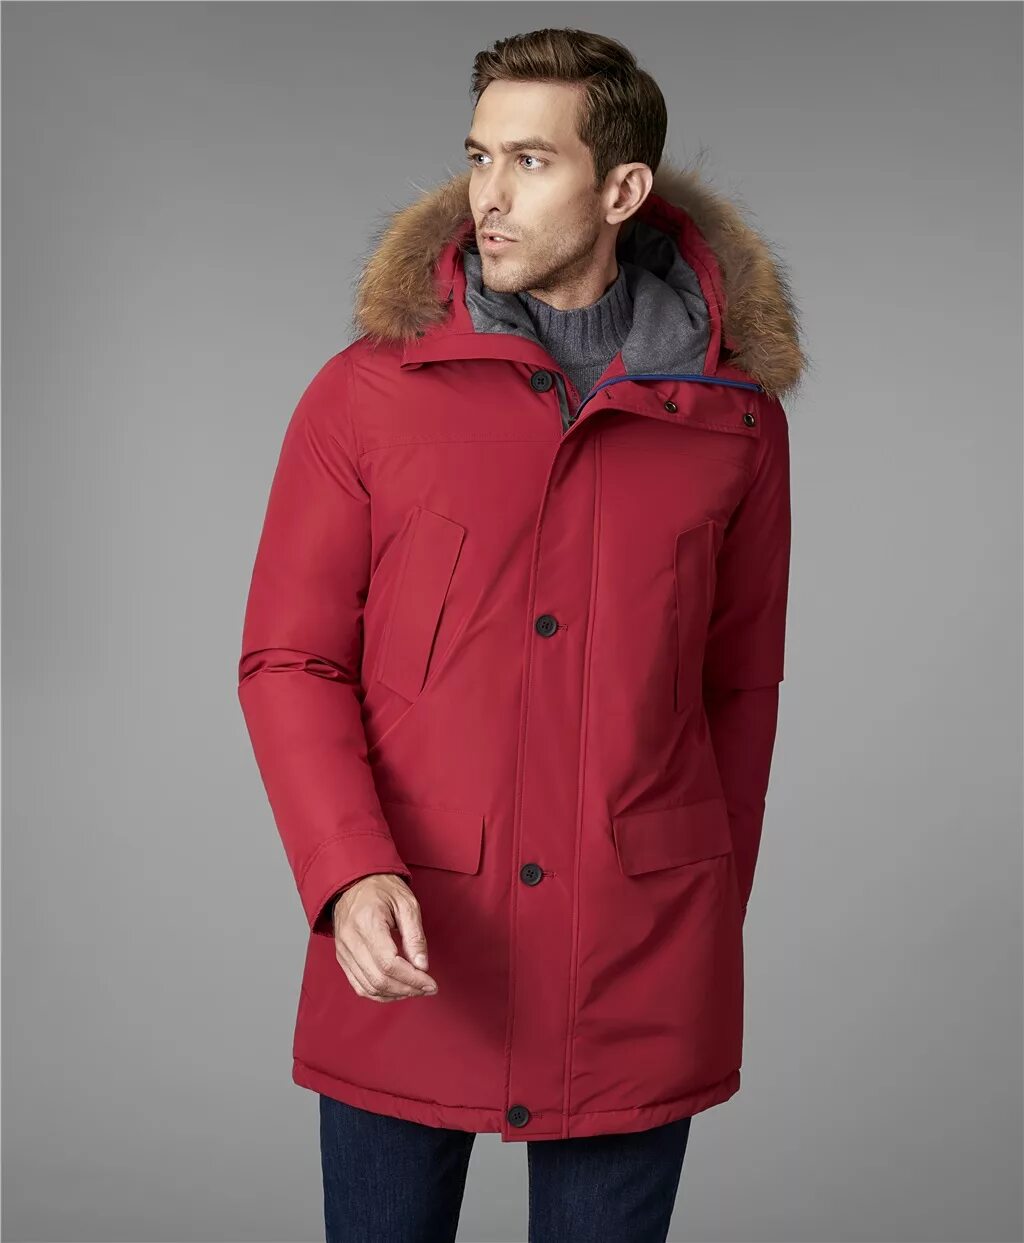 Куртки henderson мужские. Куртка мужская зимняя Henderson JK-0310. JK-0377 Red Henderson куртка. Парка Хендерсон мужская. Зимняя куртка Хендерсон.